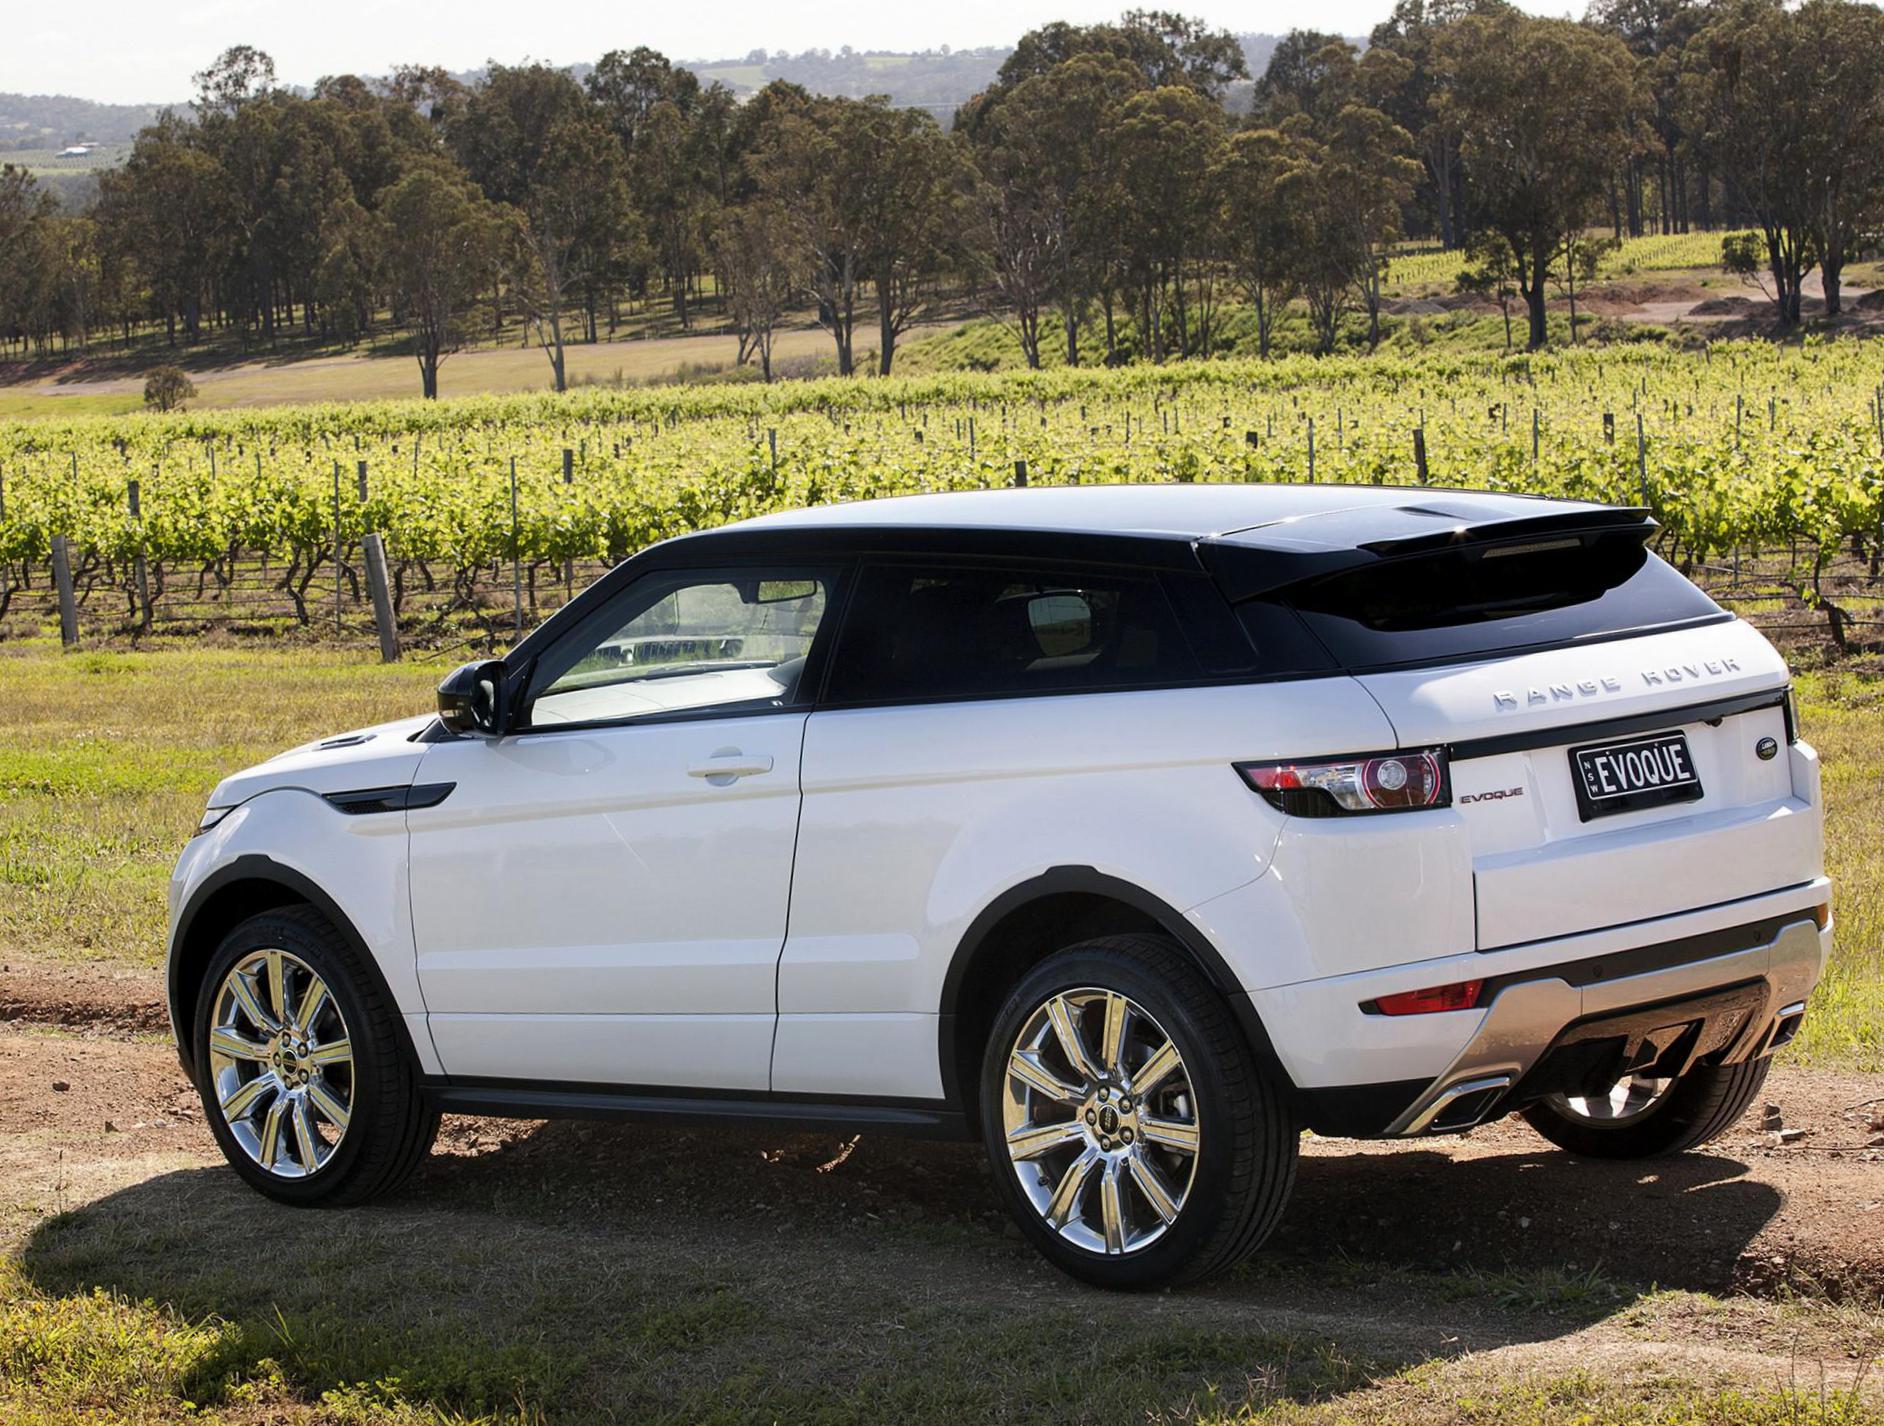 Range Rover Evoque Coupe Land Rover models sedan